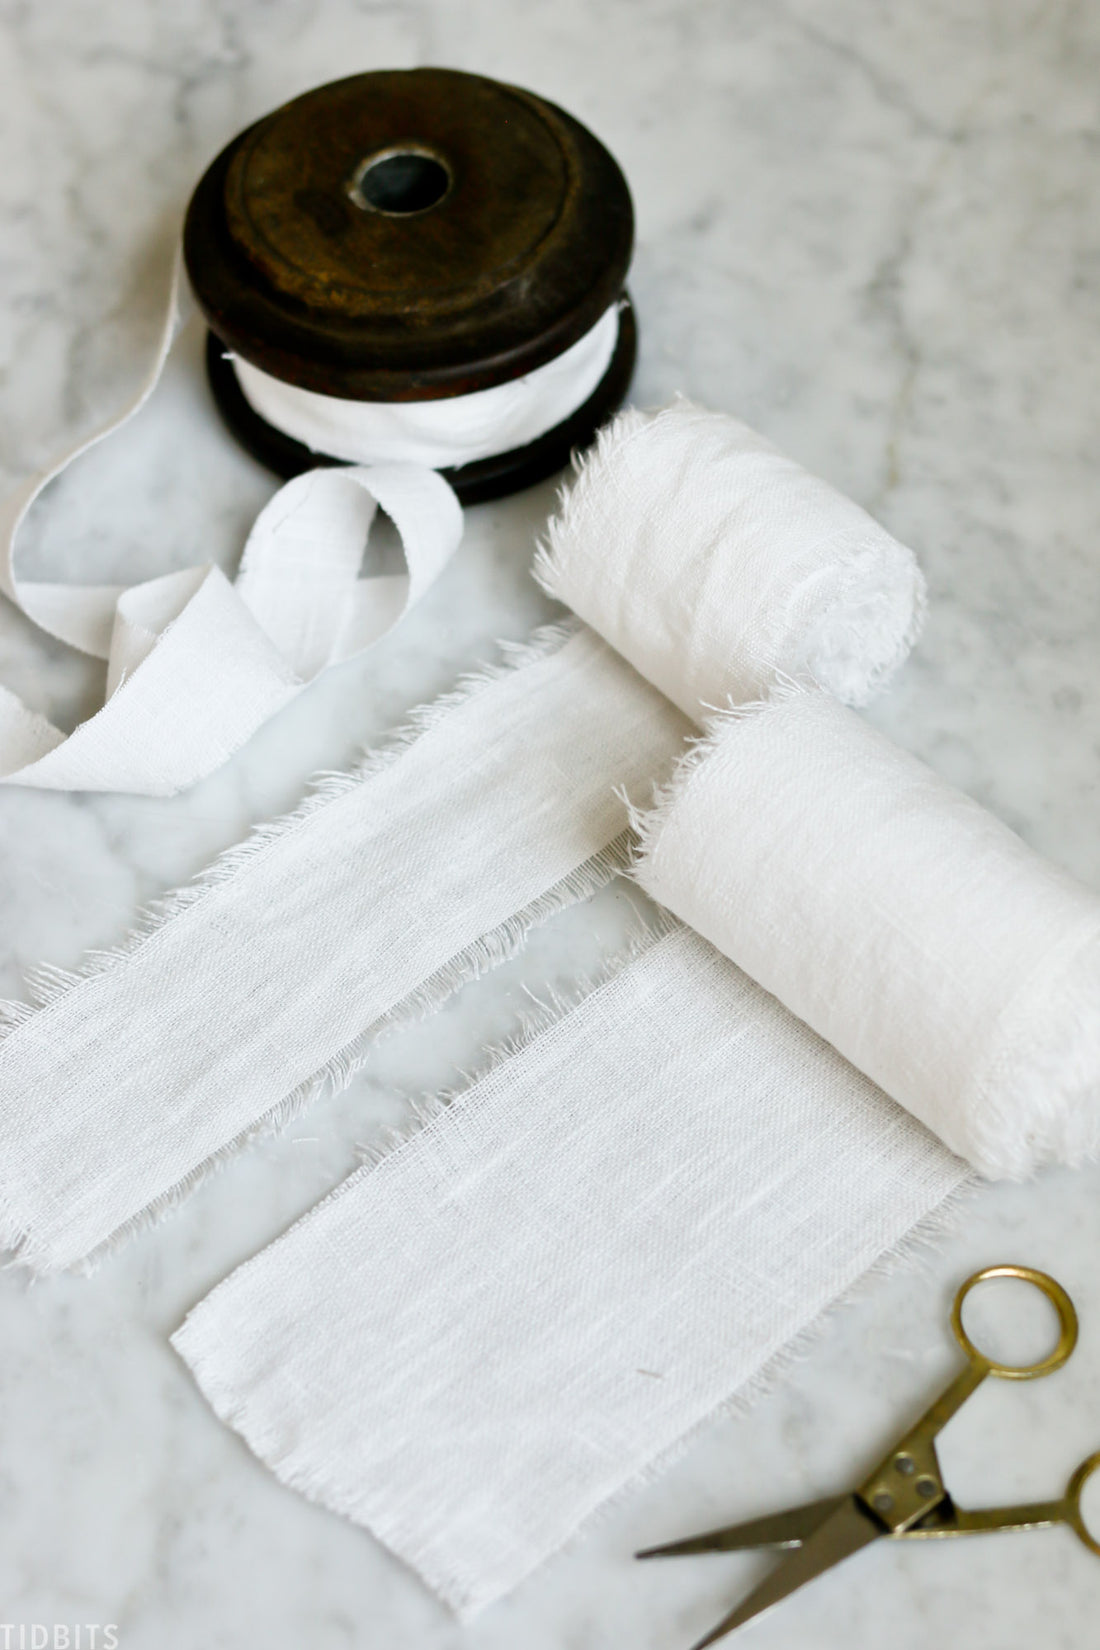 Natural Linen-Cotton Blend Frayed Ribbon • 1 • 1-1/2 • 2-1/2